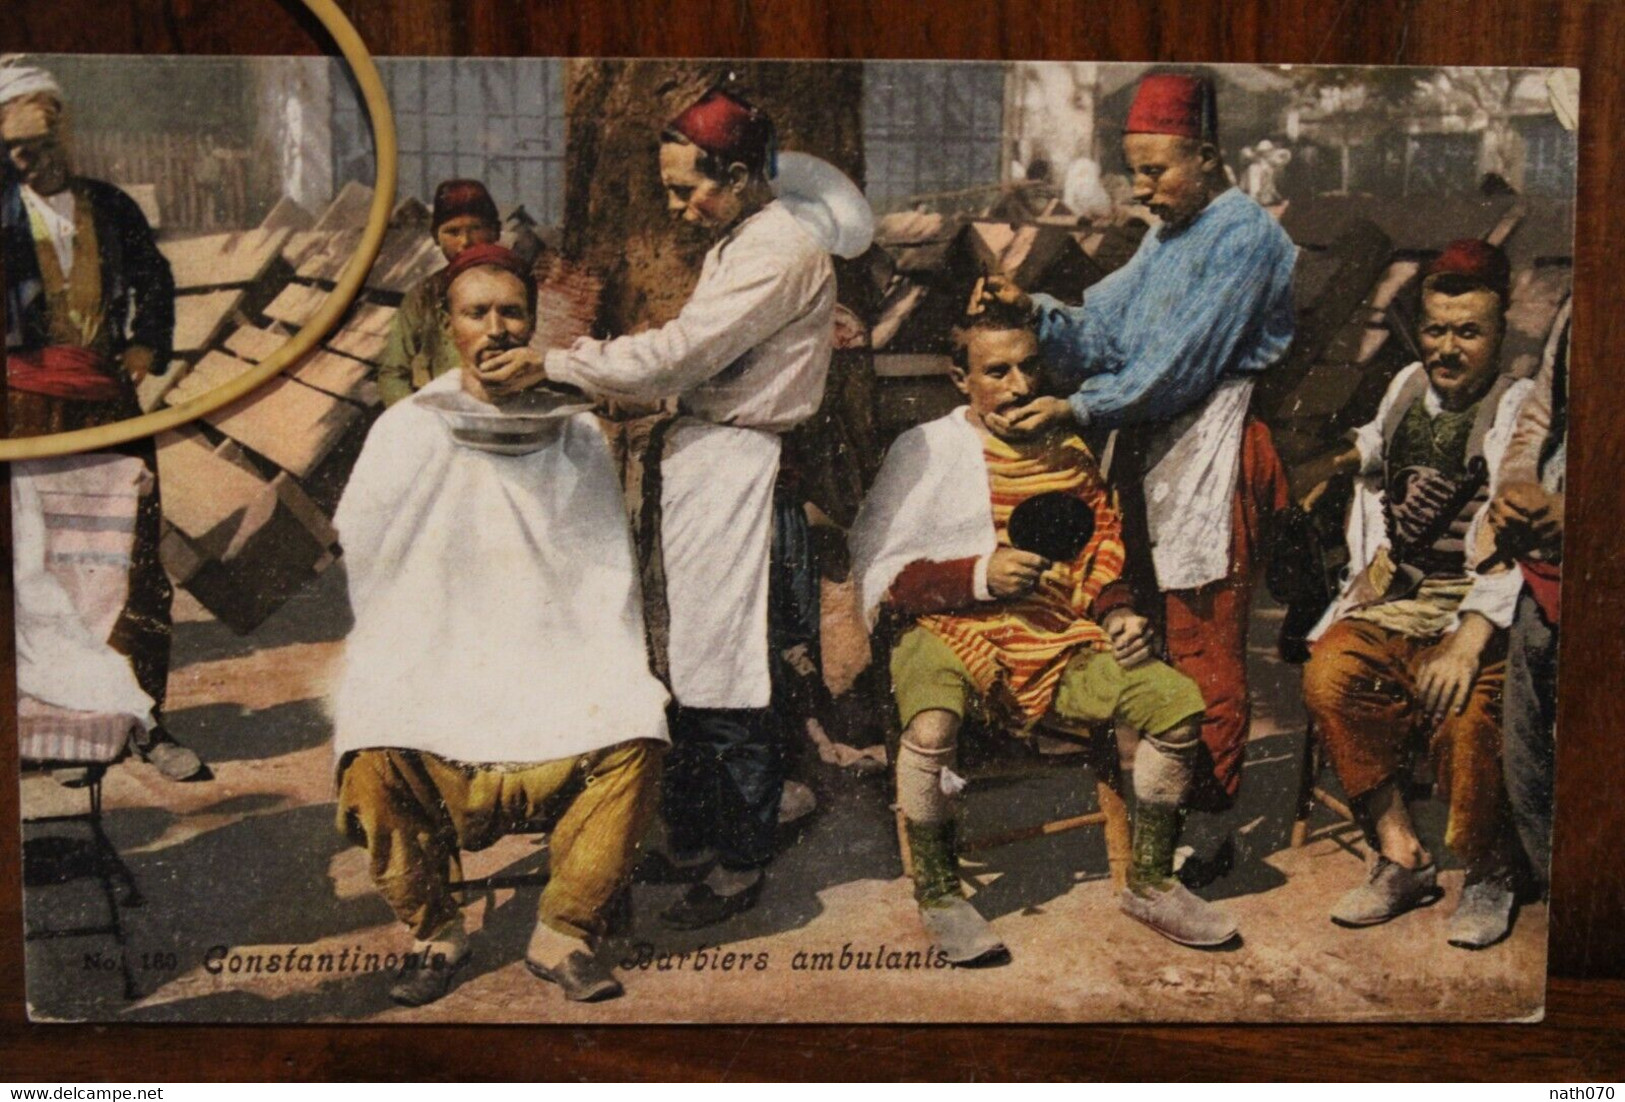 AK 1910 CPA PERA Barbiers Ambulants LEVANT Turkey Empire Ottoman Turkish - Turquie